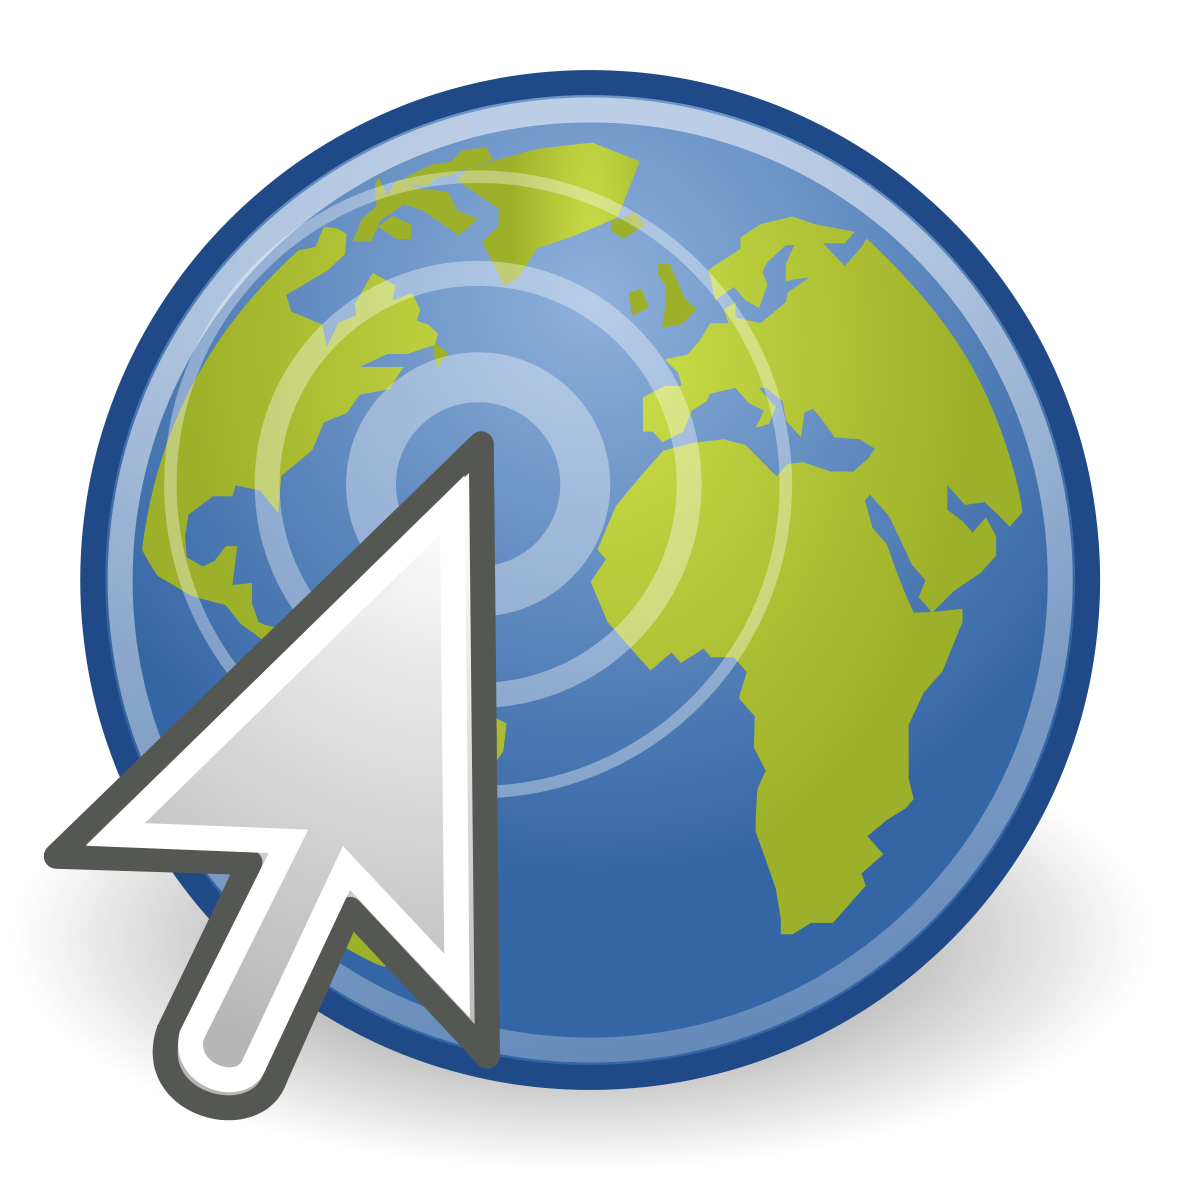 Web browser logo or icon